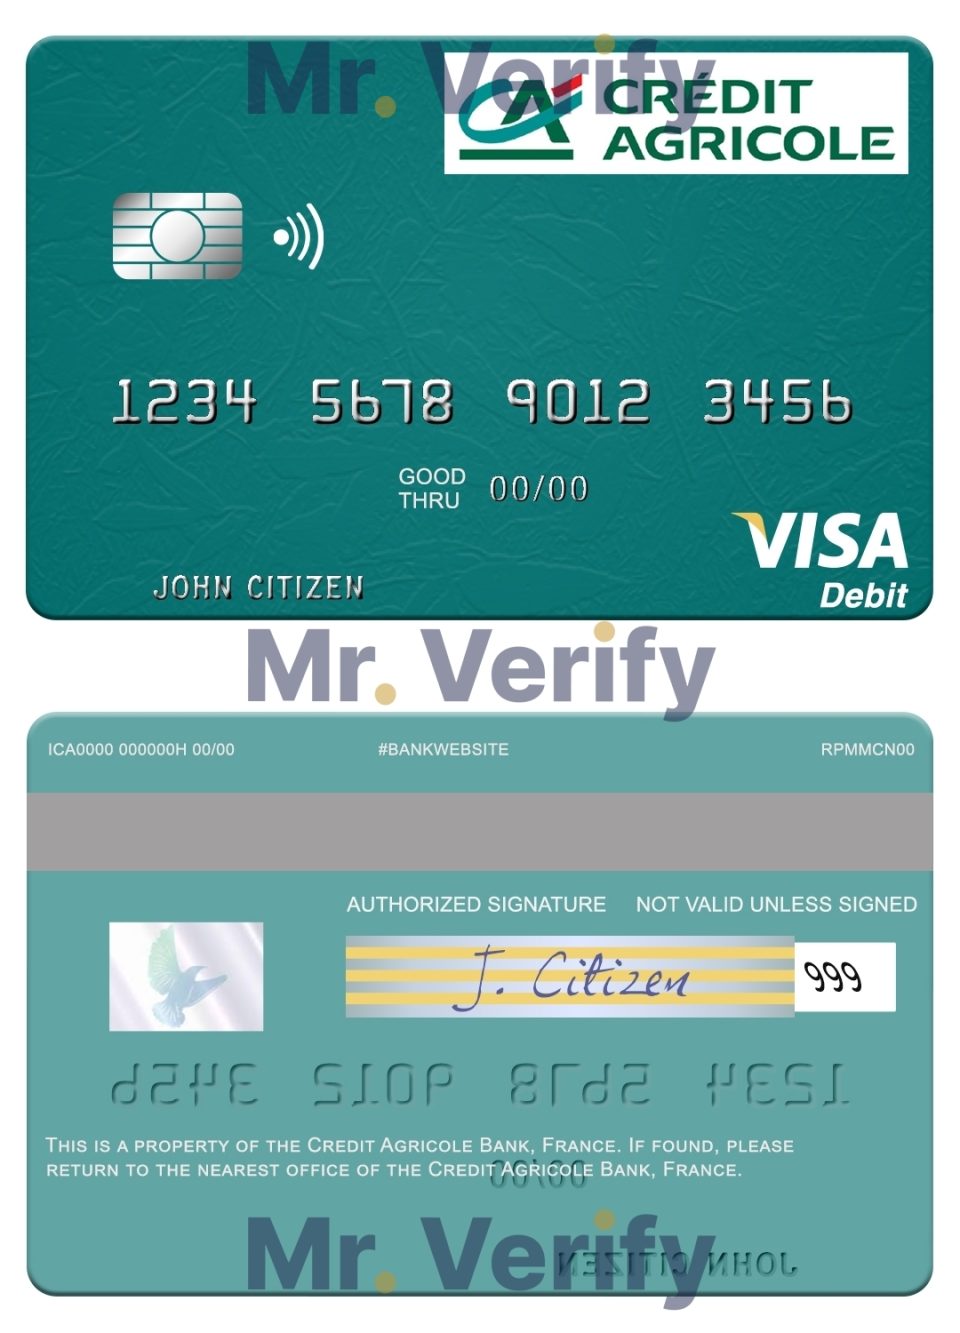 Fillable France Credit Agricole Bank visa debit card Templates